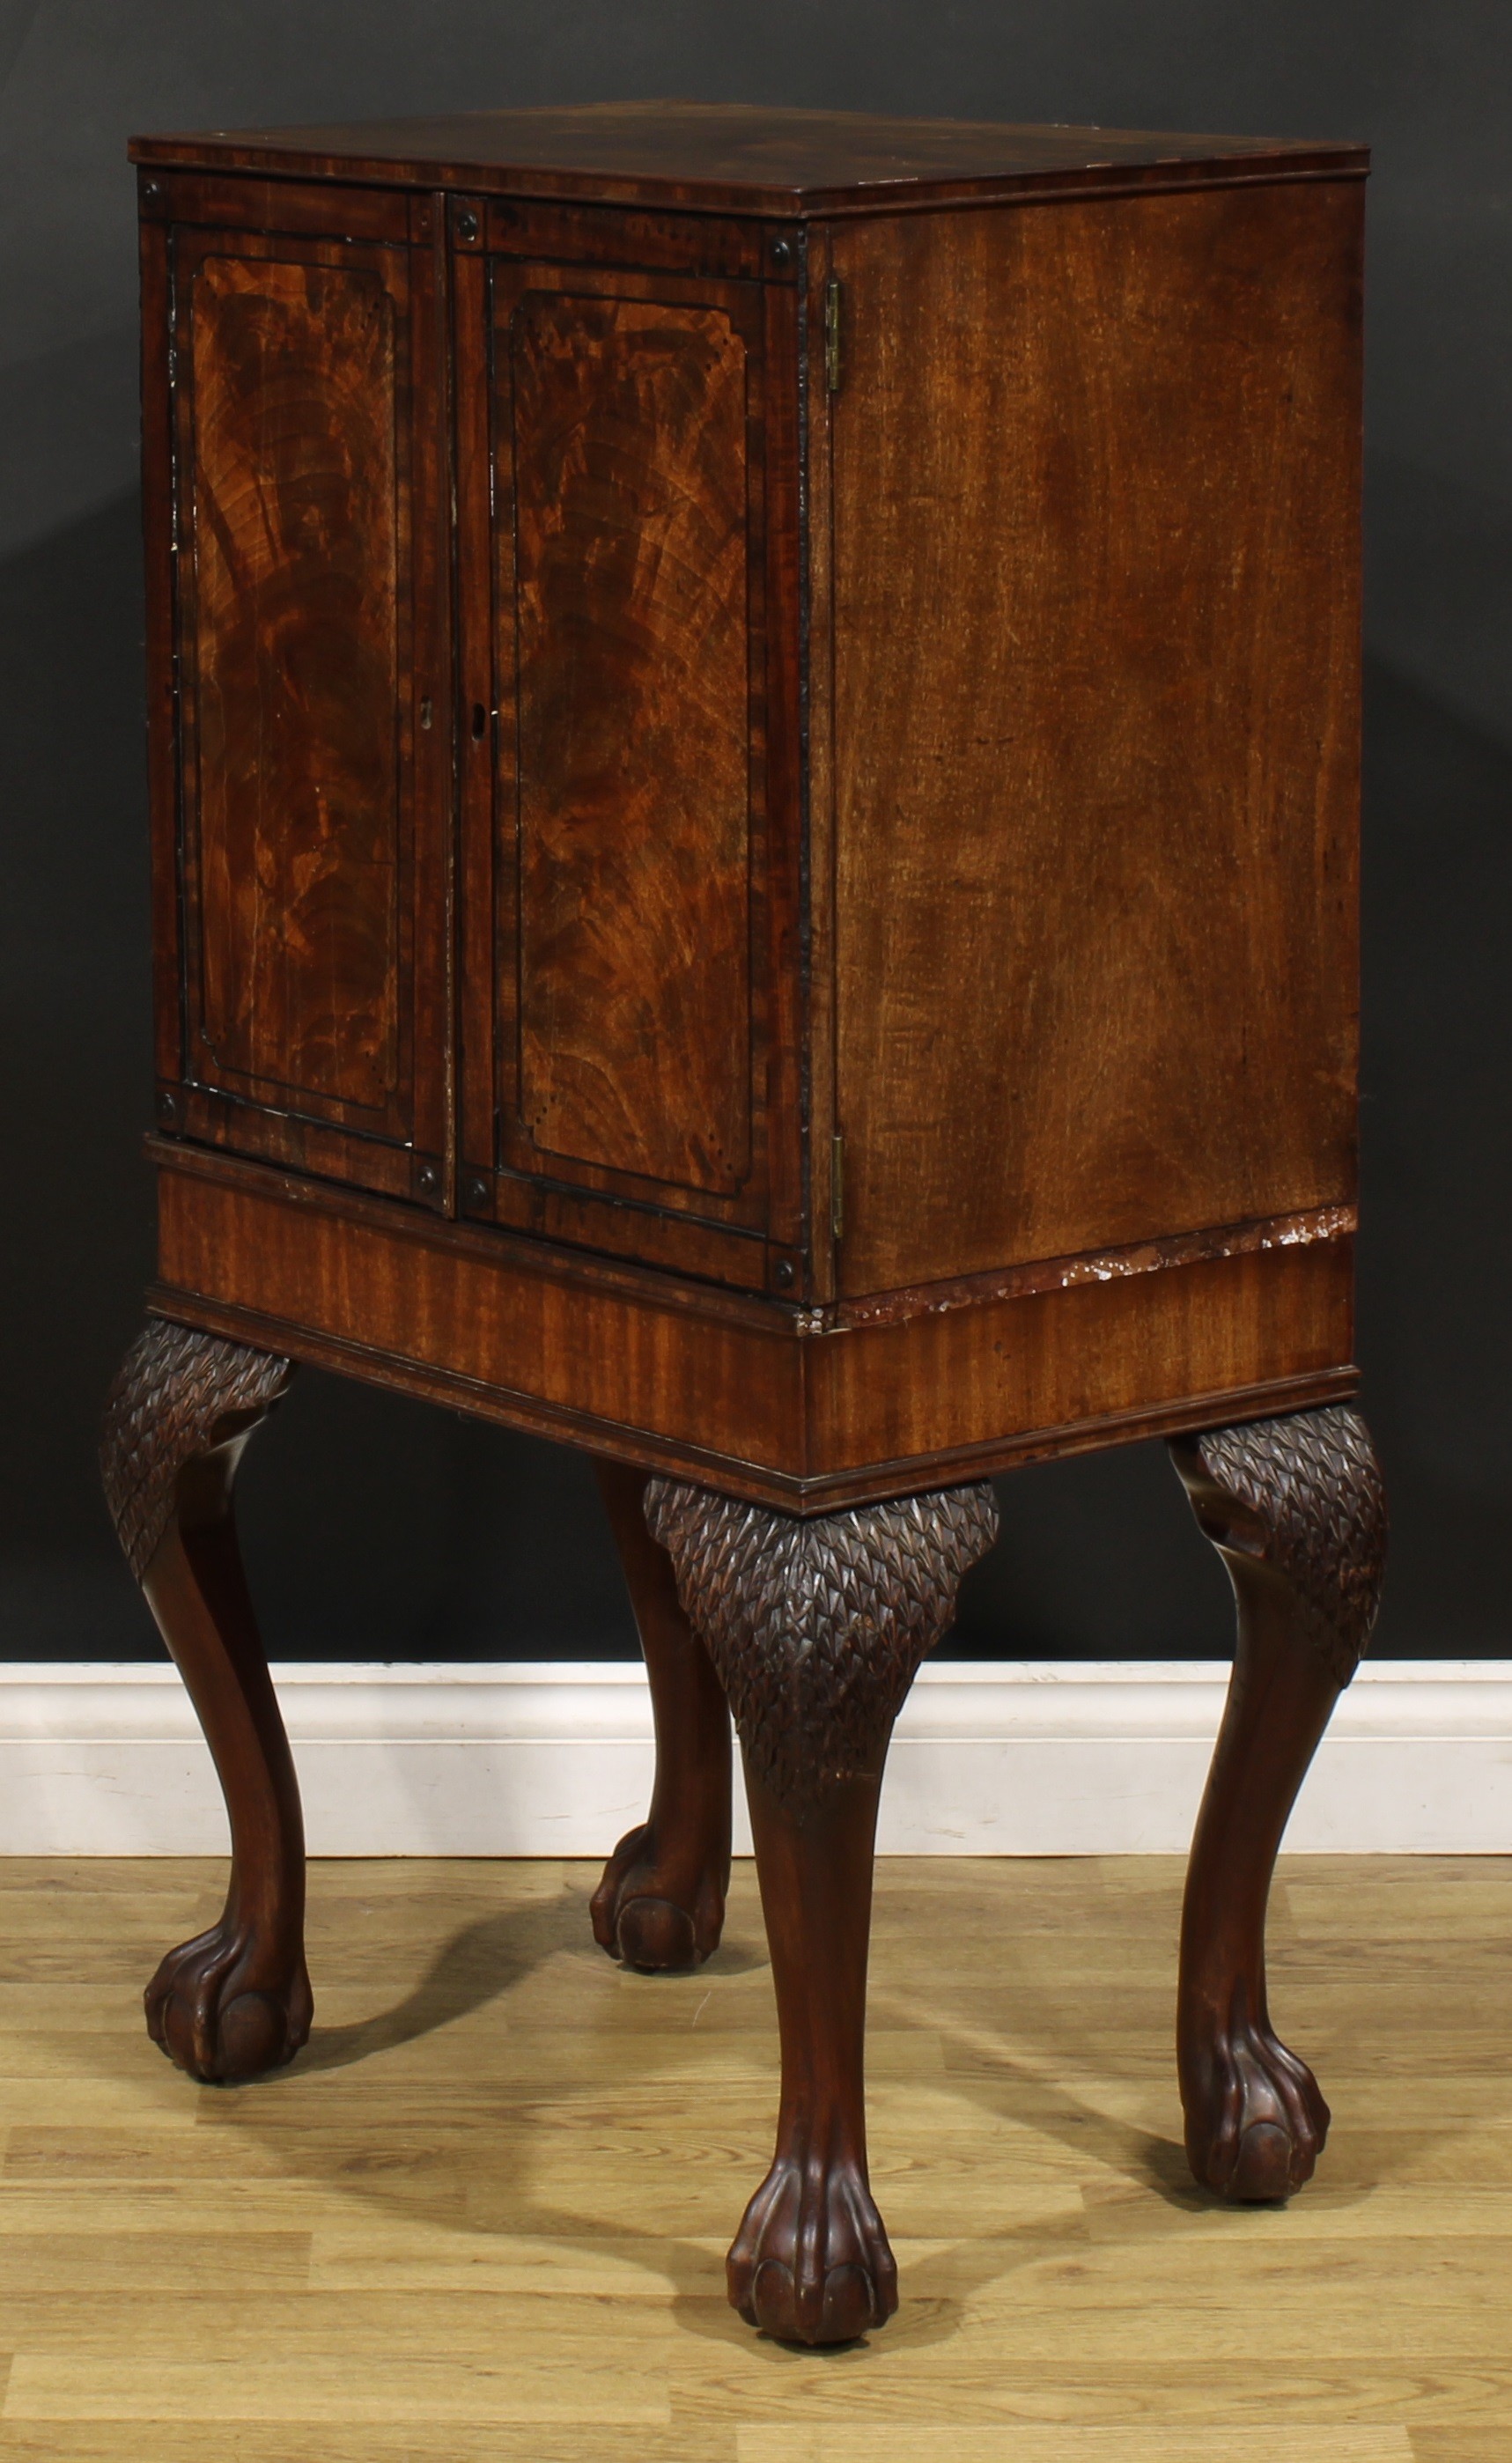 A 19th century Irish mahogany connoisseur’s enclosed collector’s specimen cabinet, rectangular top - Image 4 of 5